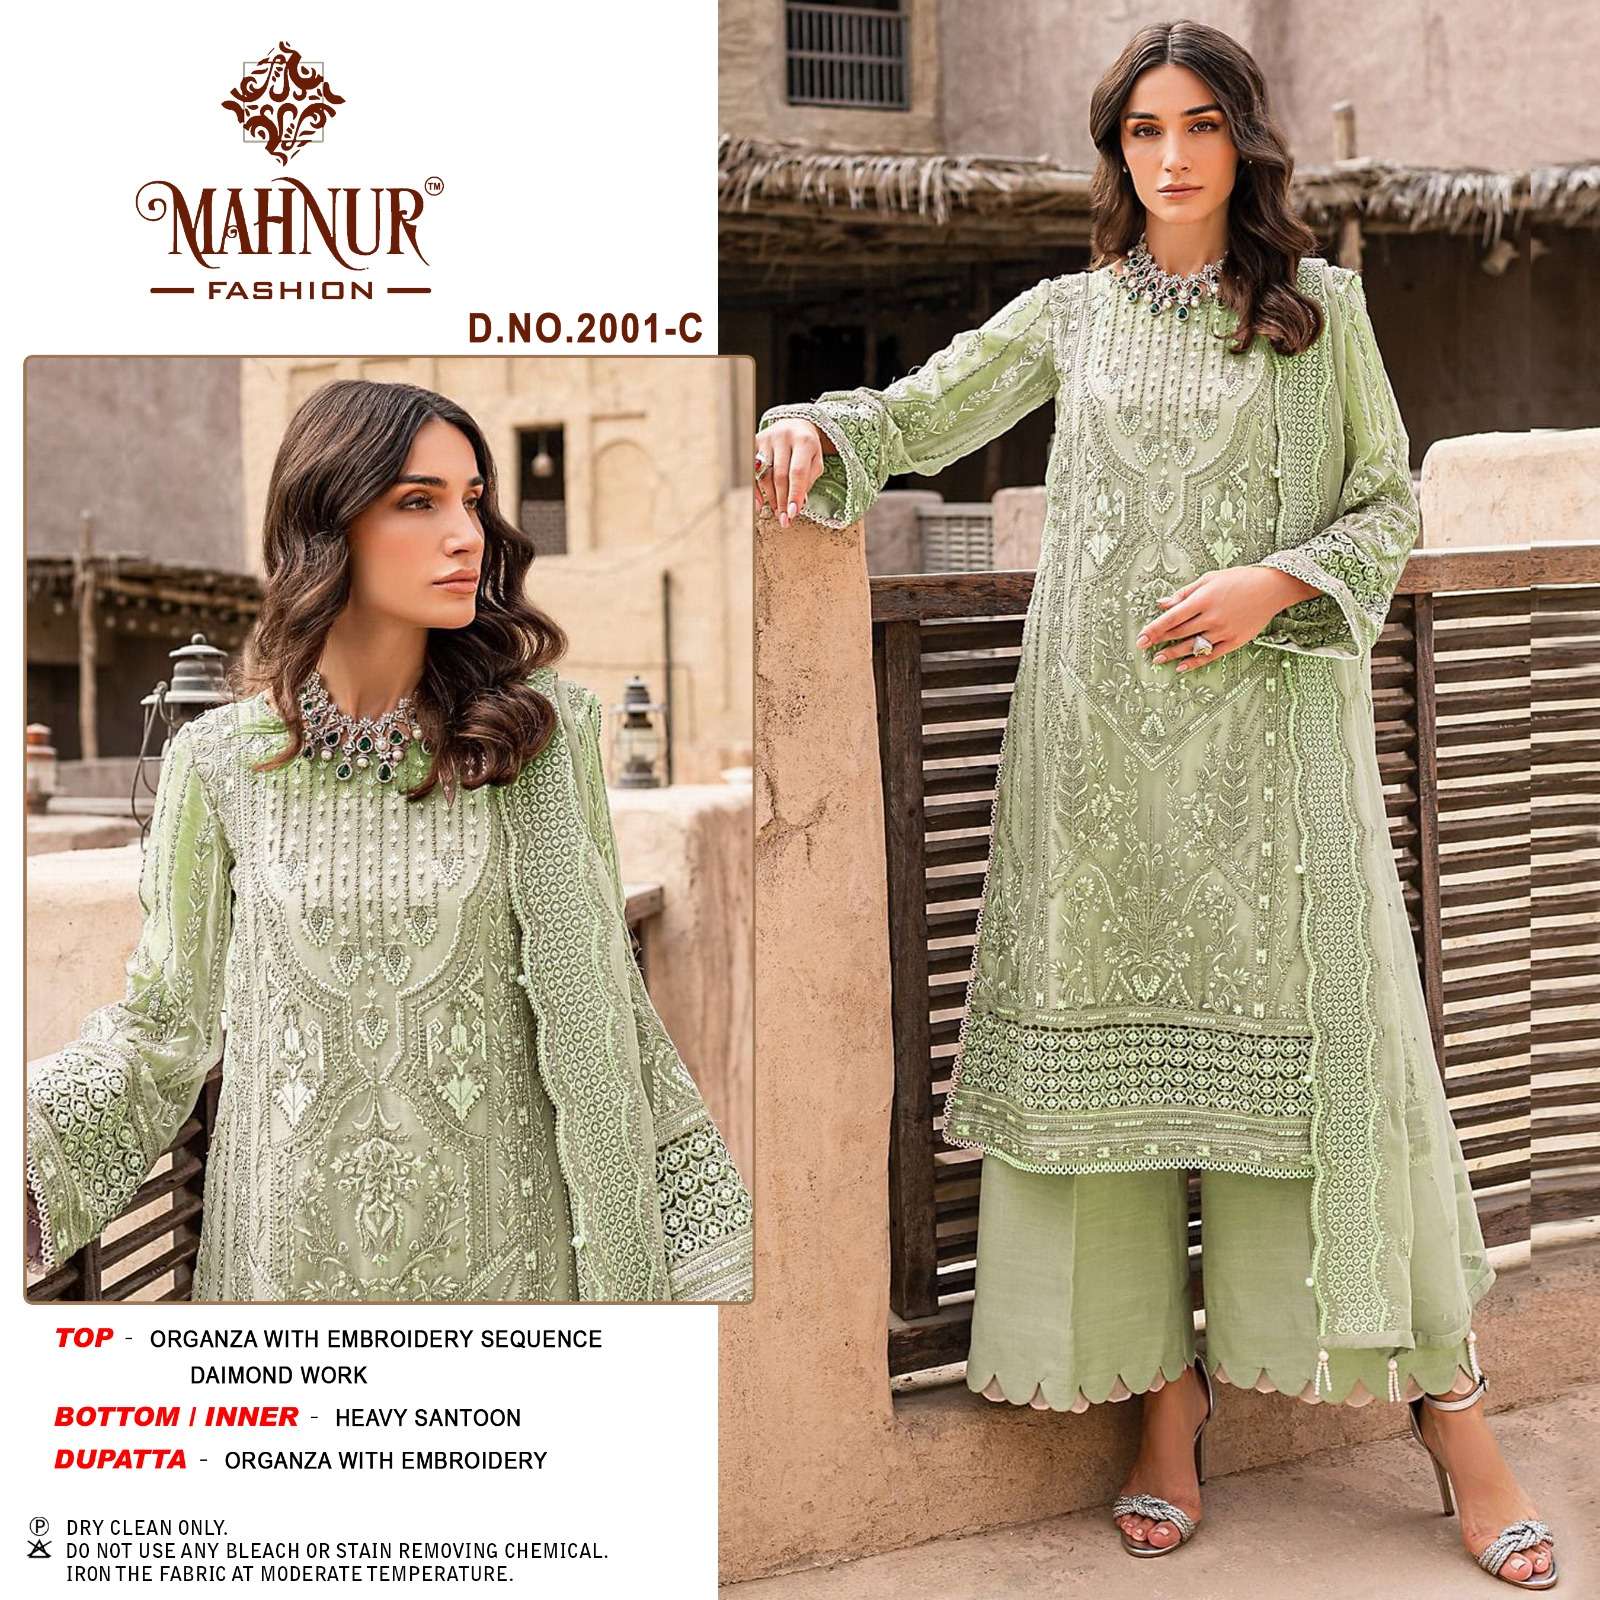 Mahnur Emaan Adeel Premium Collection Vol 2 Pakistani Suits Wholesale catalog